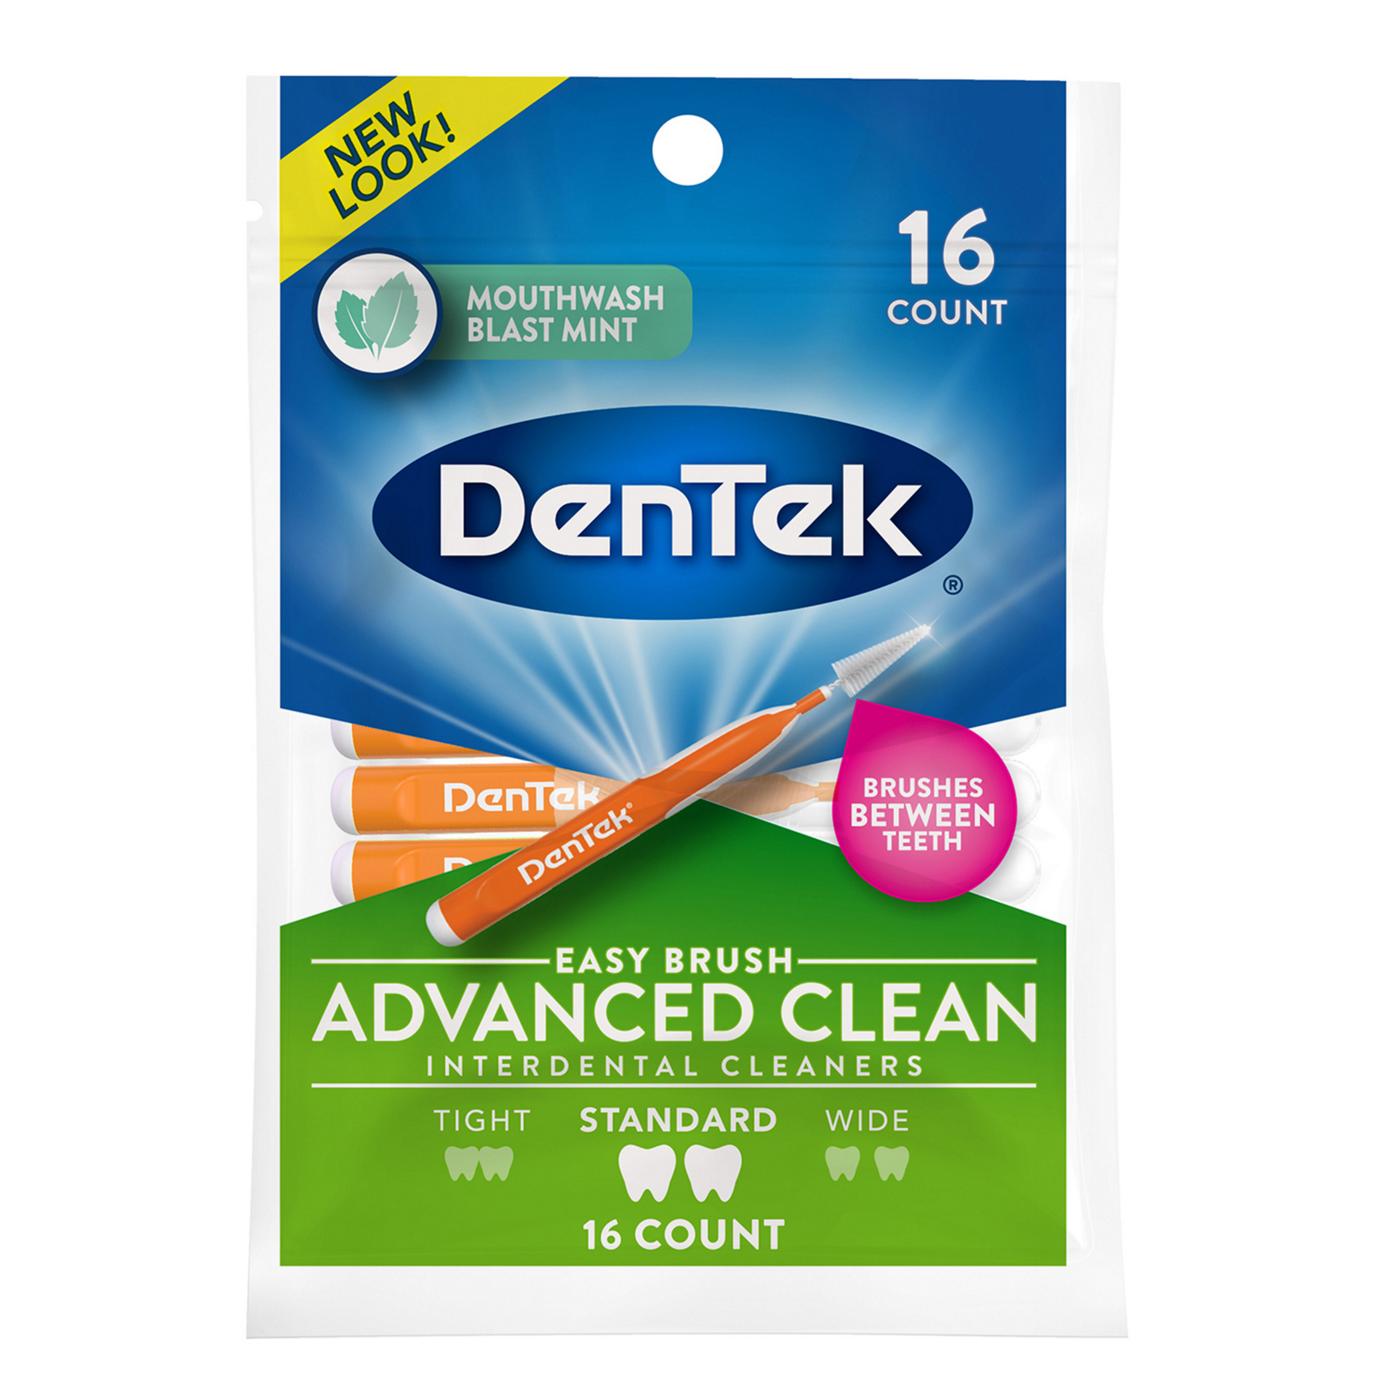 DenTek Easy Brush Advanced Clean Interdental Cleaners; image 1 of 4